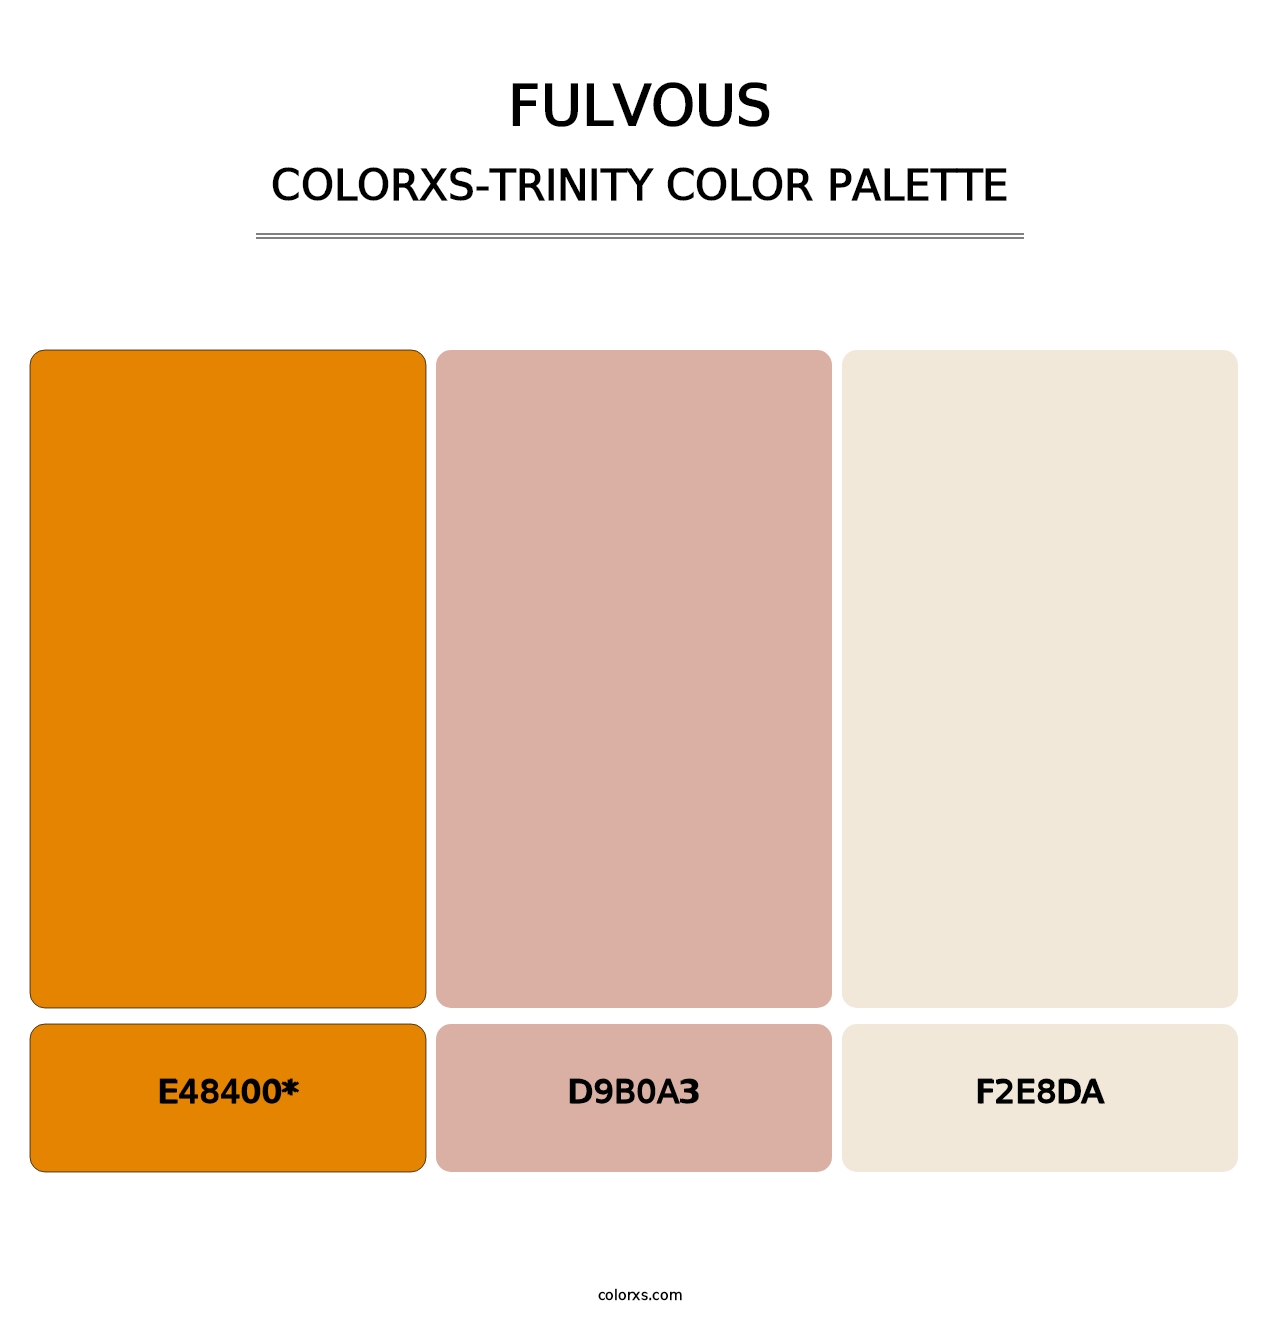 Fulvous - Colorxs Trinity Palette